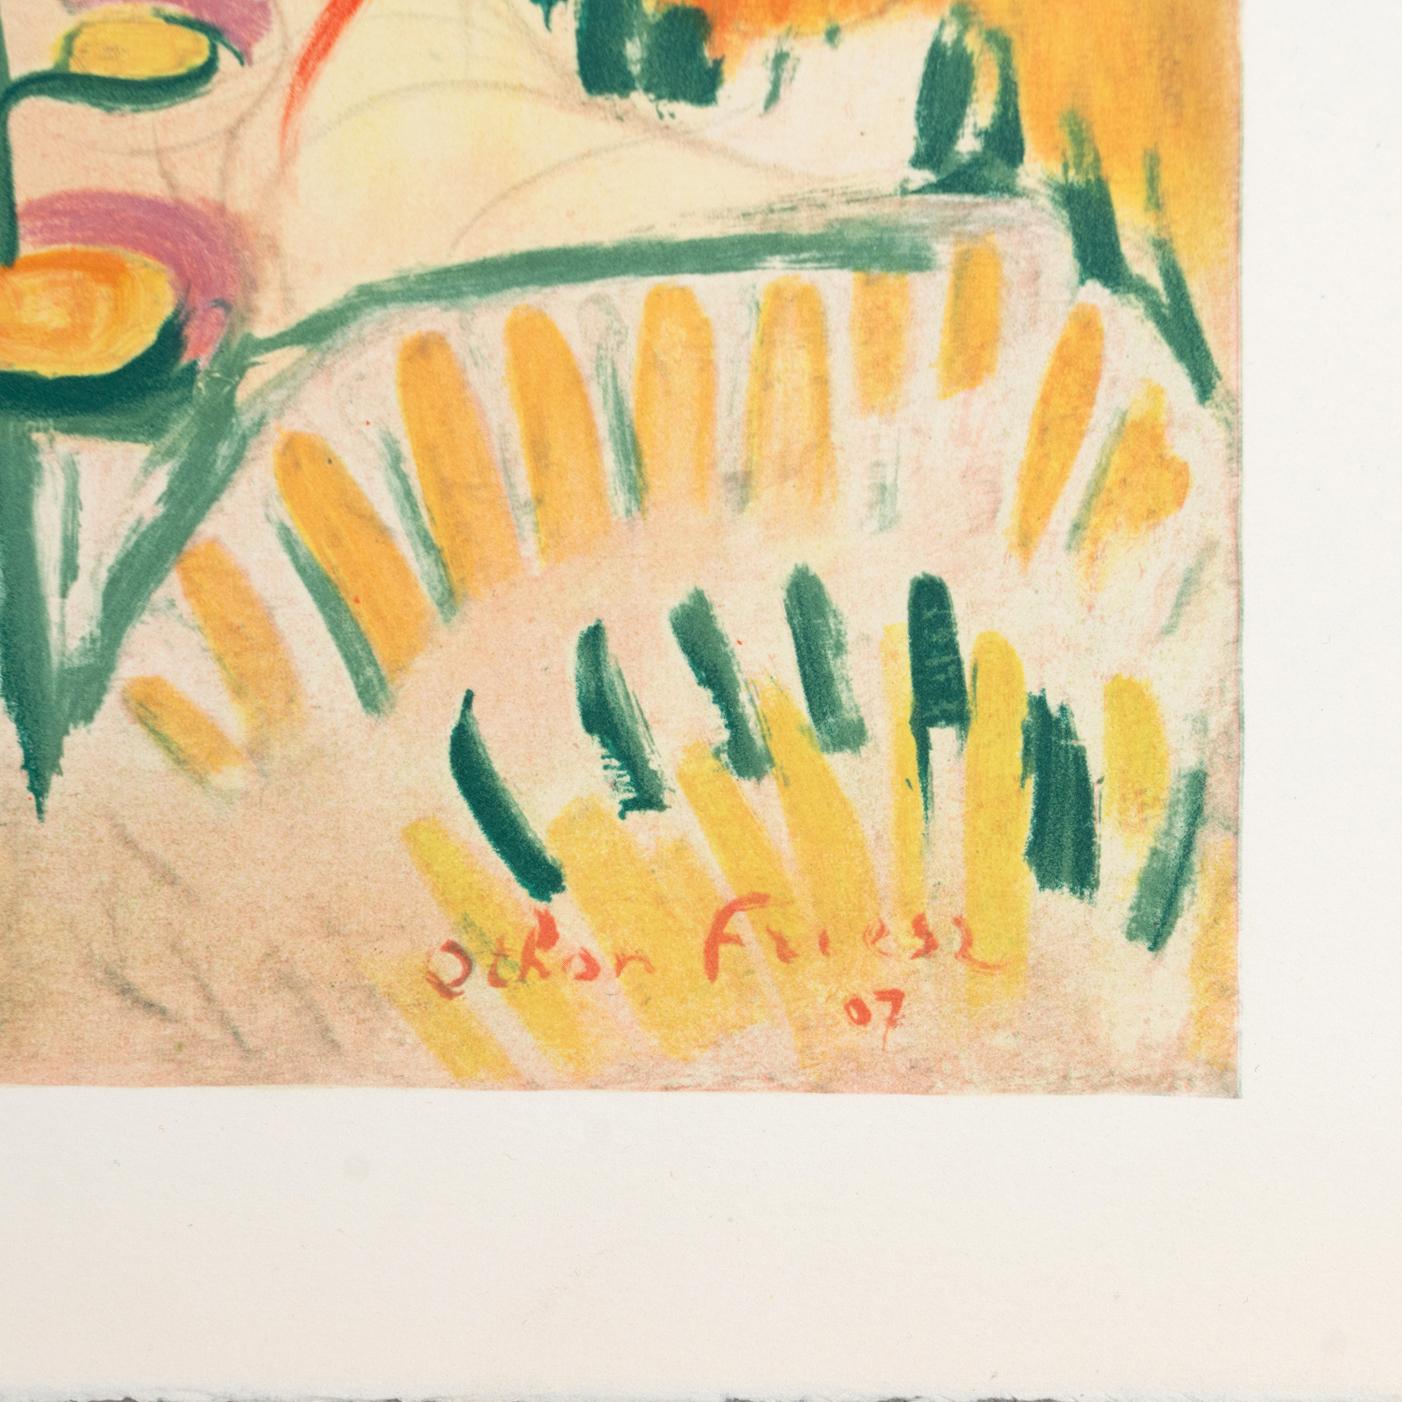 Orthon Friesz Framed 'Paysage a la Ciotat' Color Lithography, circa 1972 For Sale 3